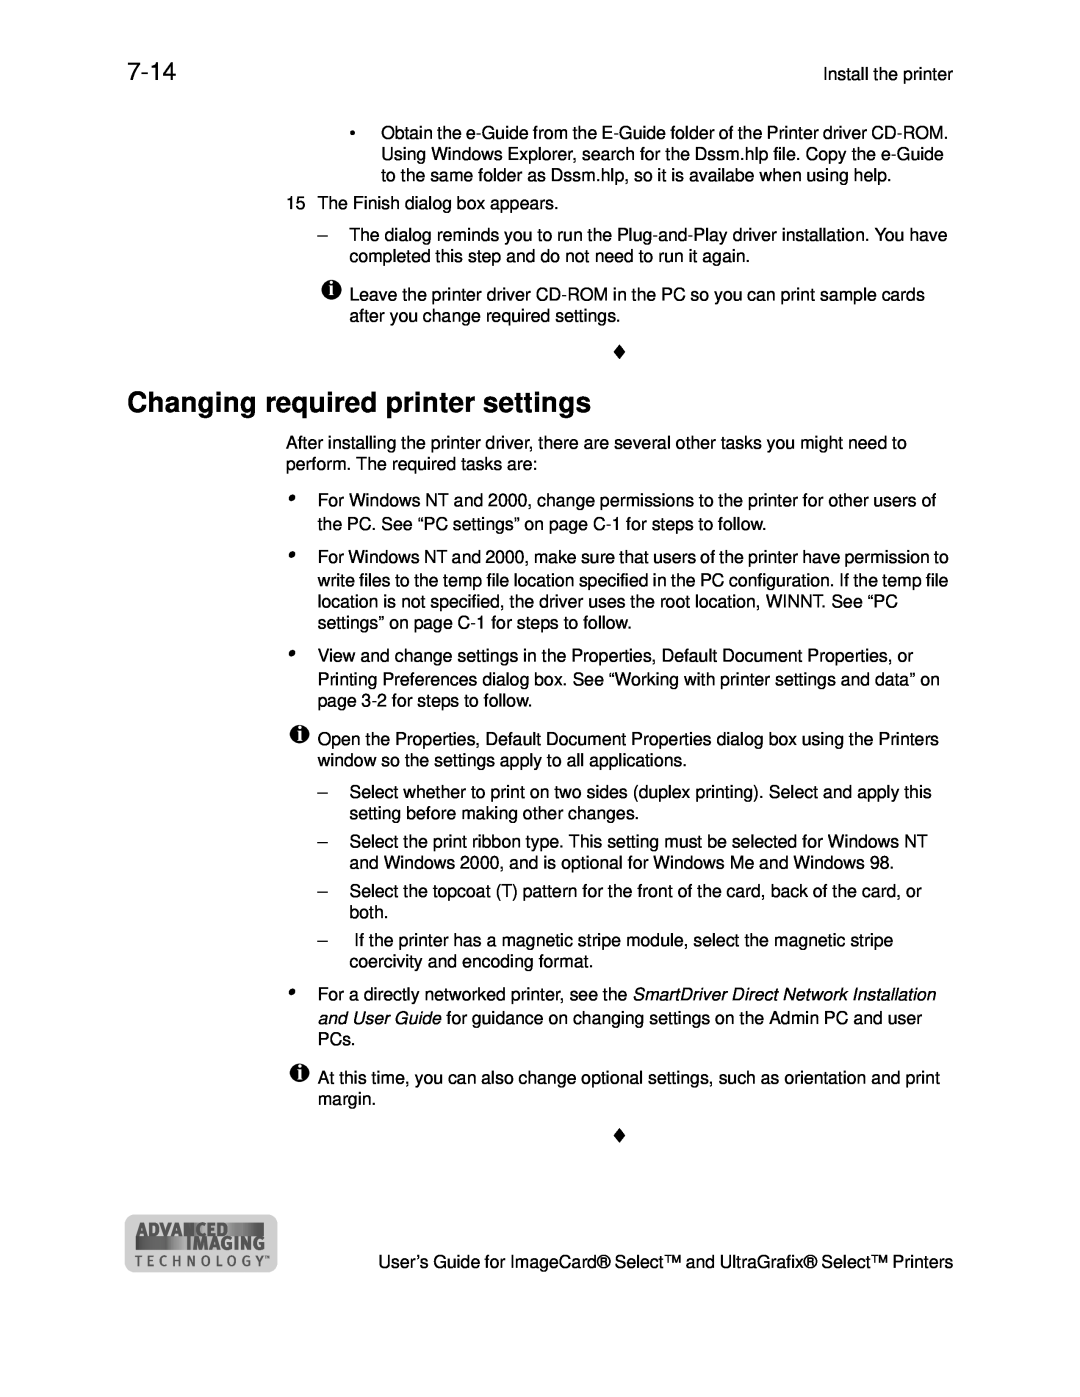 Datacard Group ImageCard SelectTM and UltraGrafix SelectTM Printers manual Changing required printer settings, 7-14 